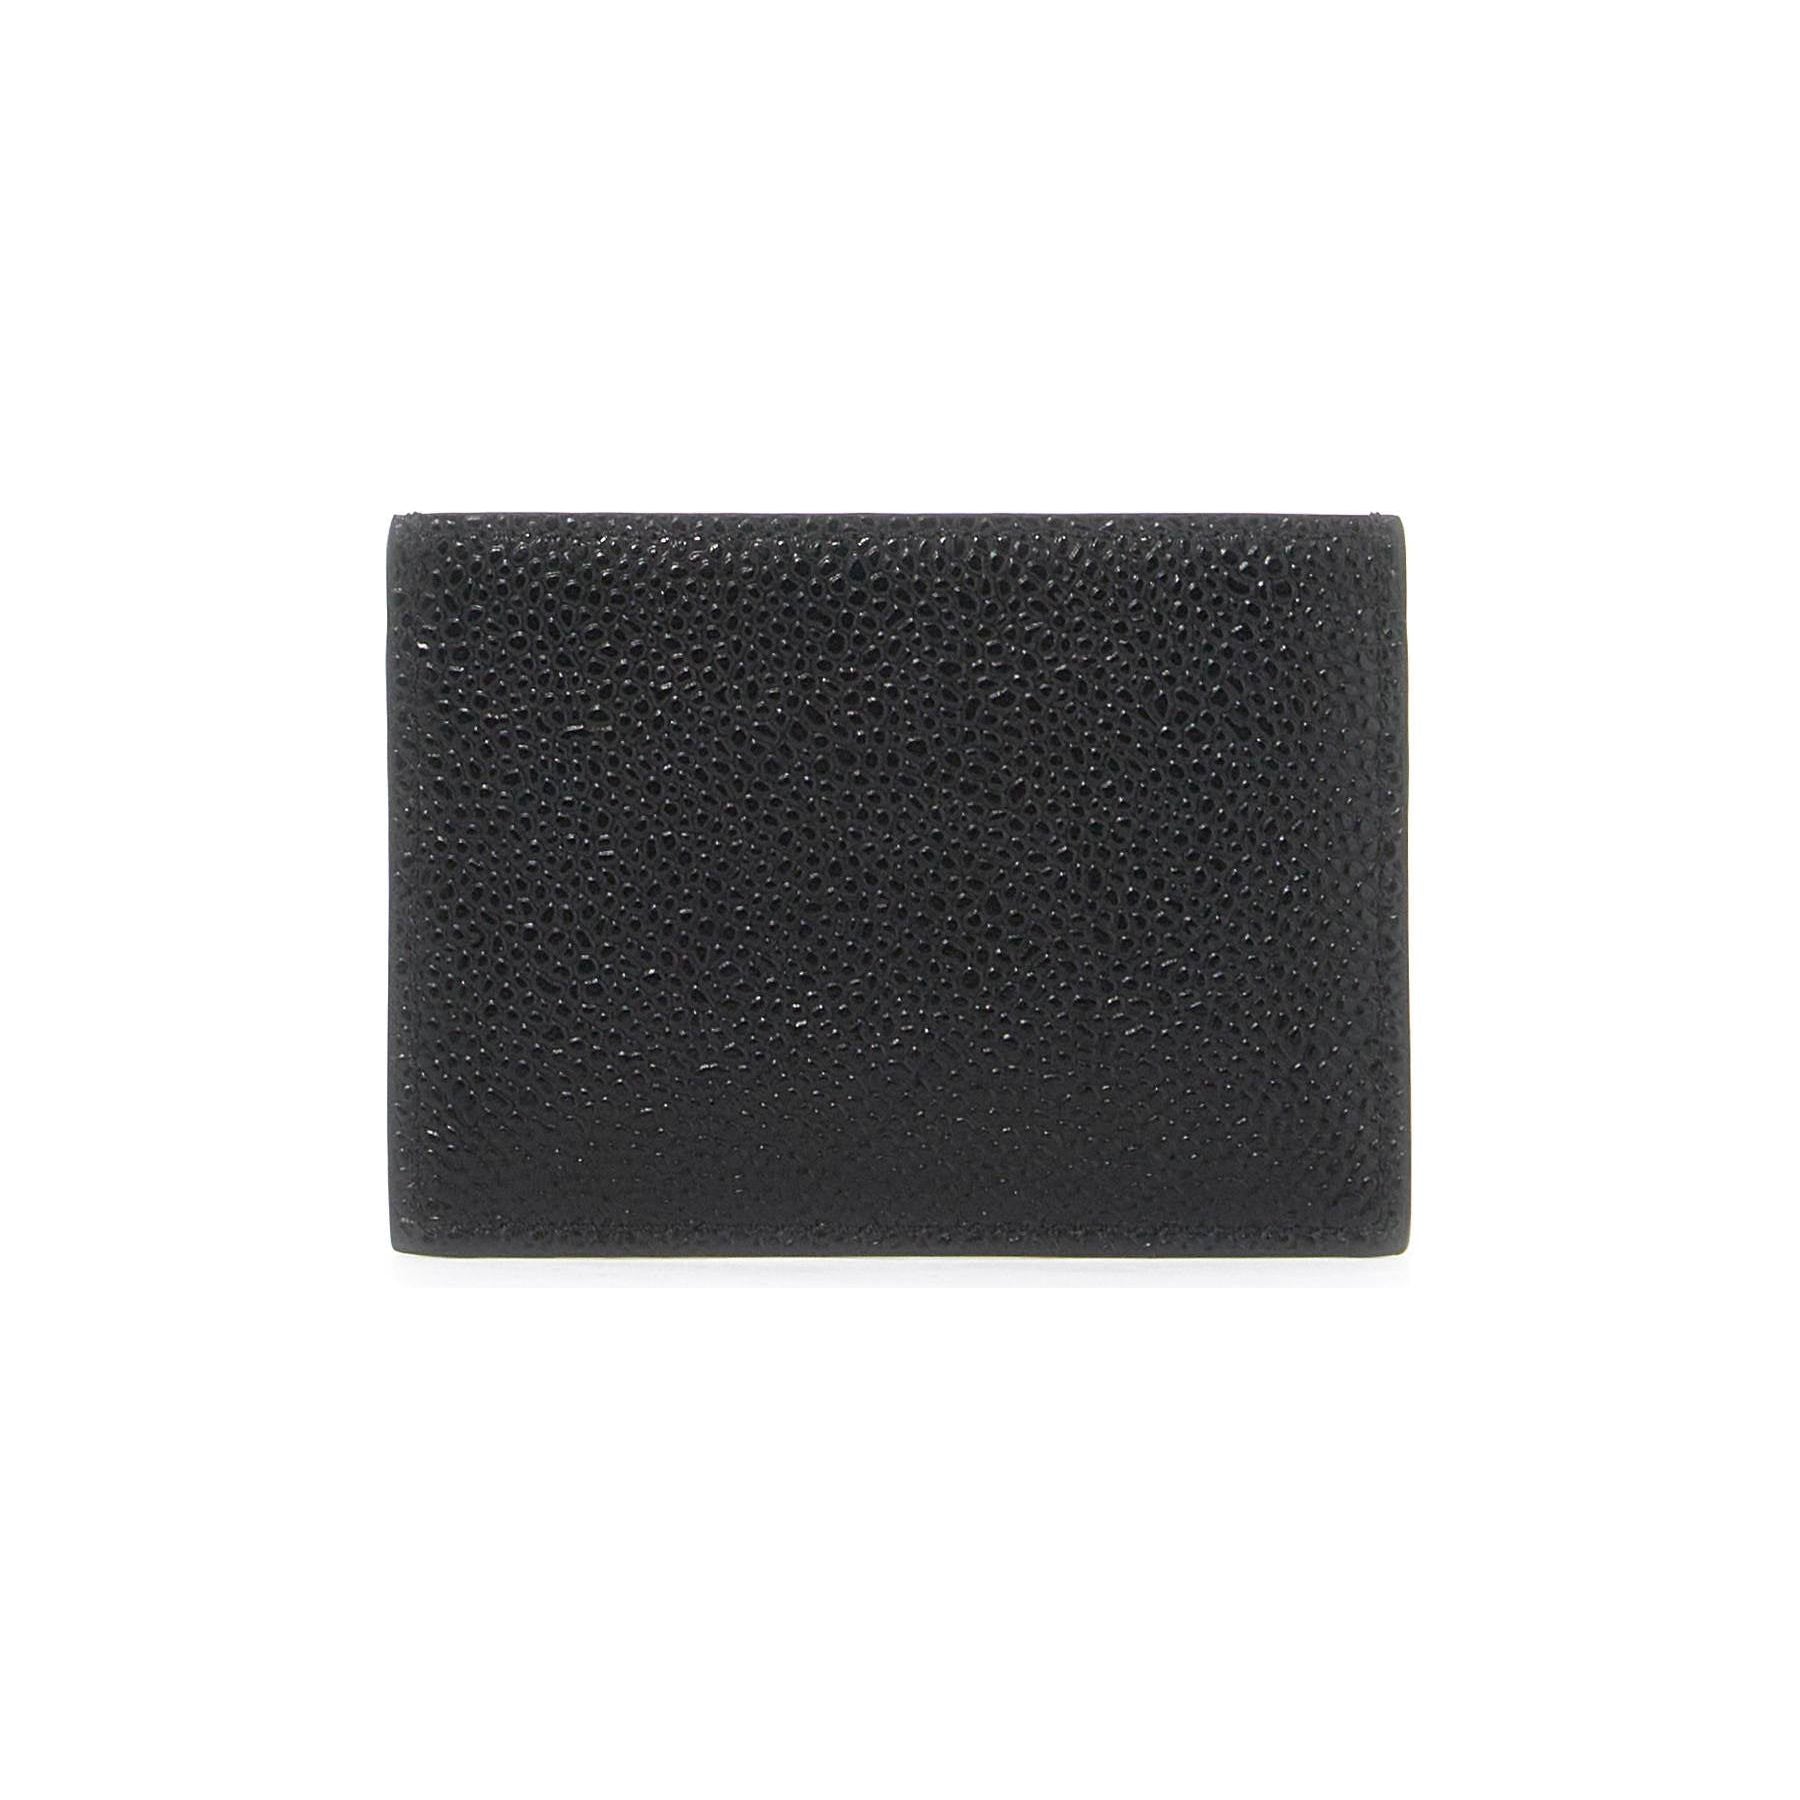 Pebble Grain Leather Card Holder